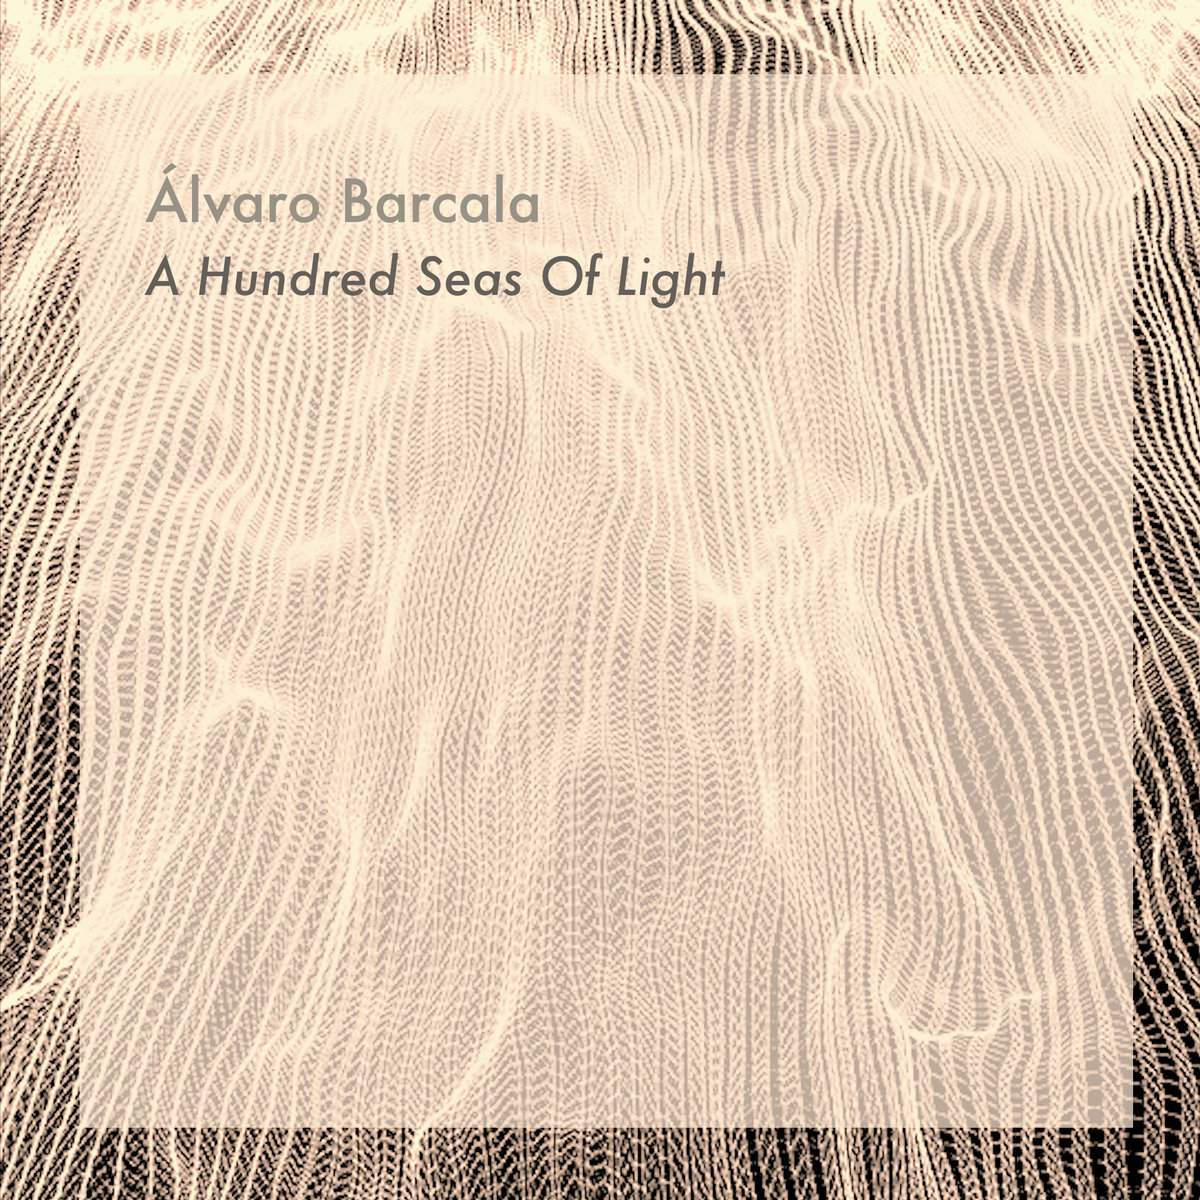 Alvaro Barcala - A Hundred Seas Of Light